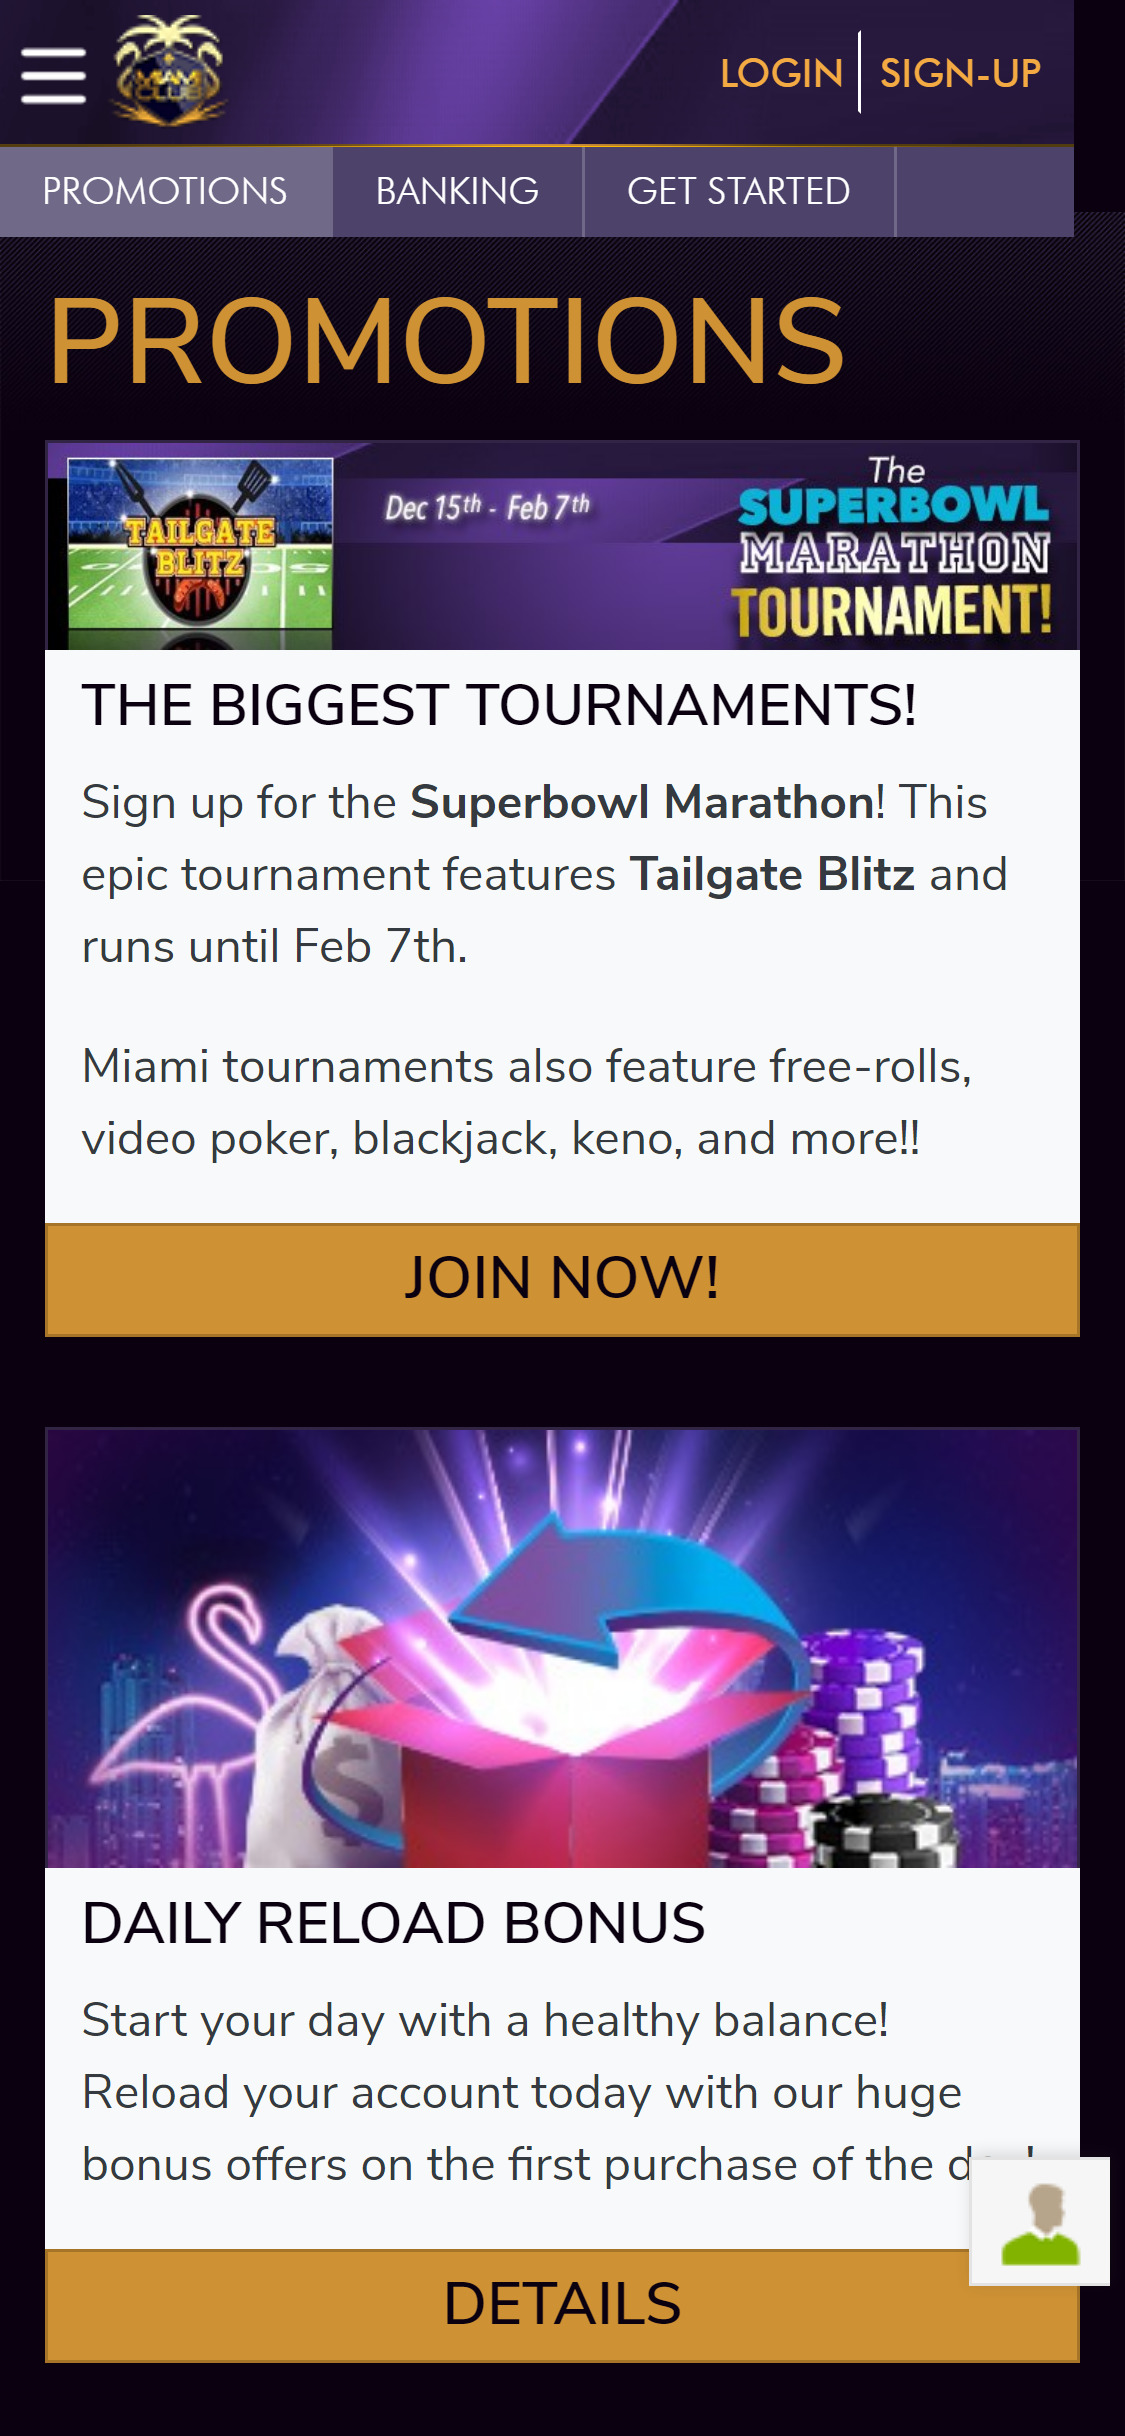 Miami Club Casino Mobile No Deposit Bonus Review